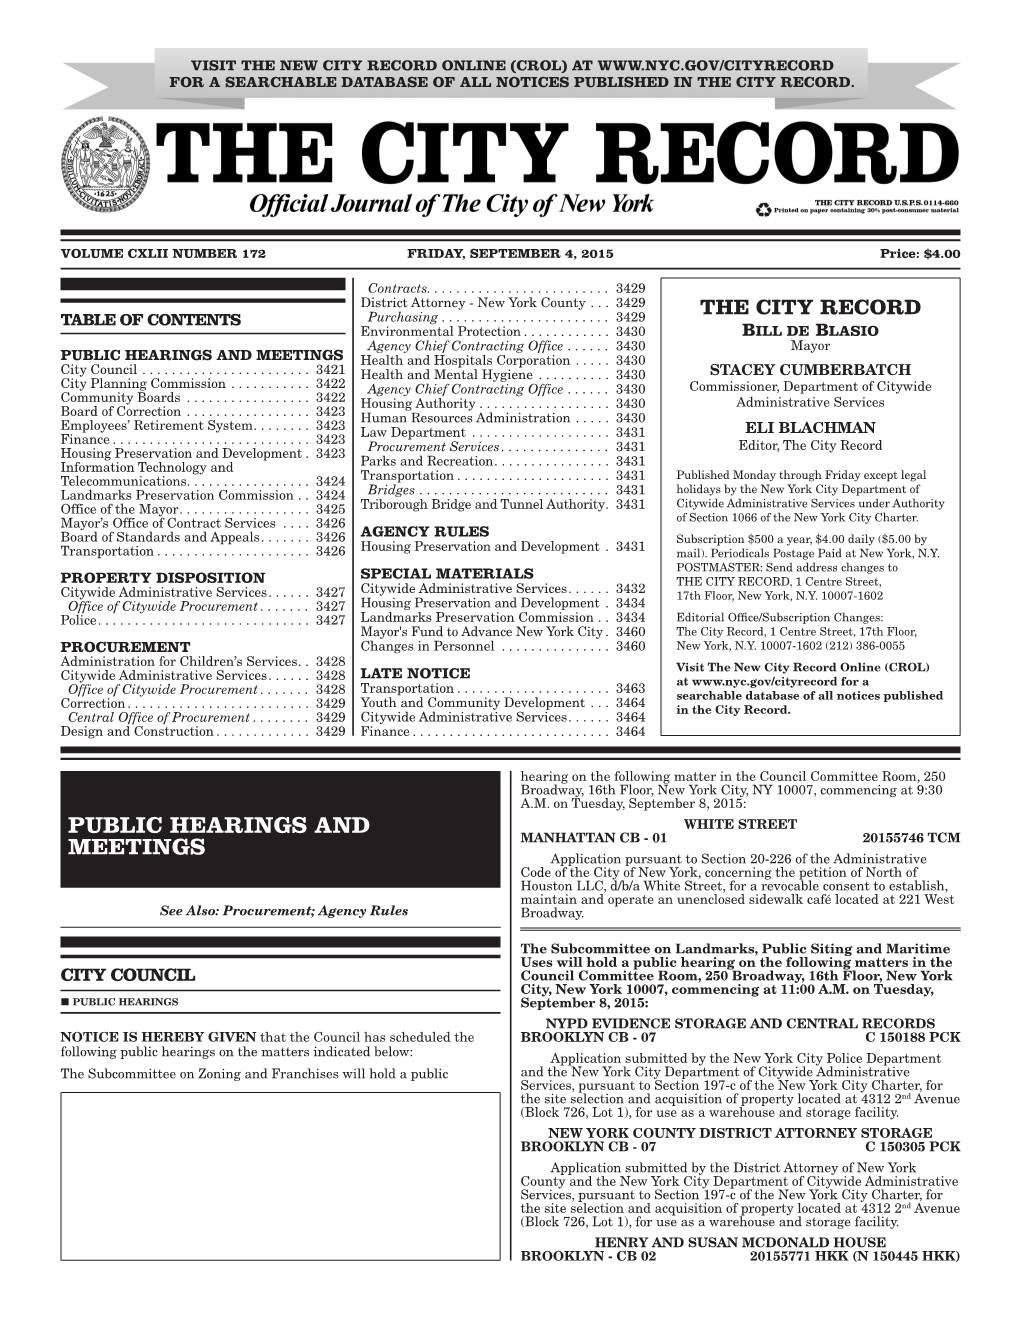 The City Record